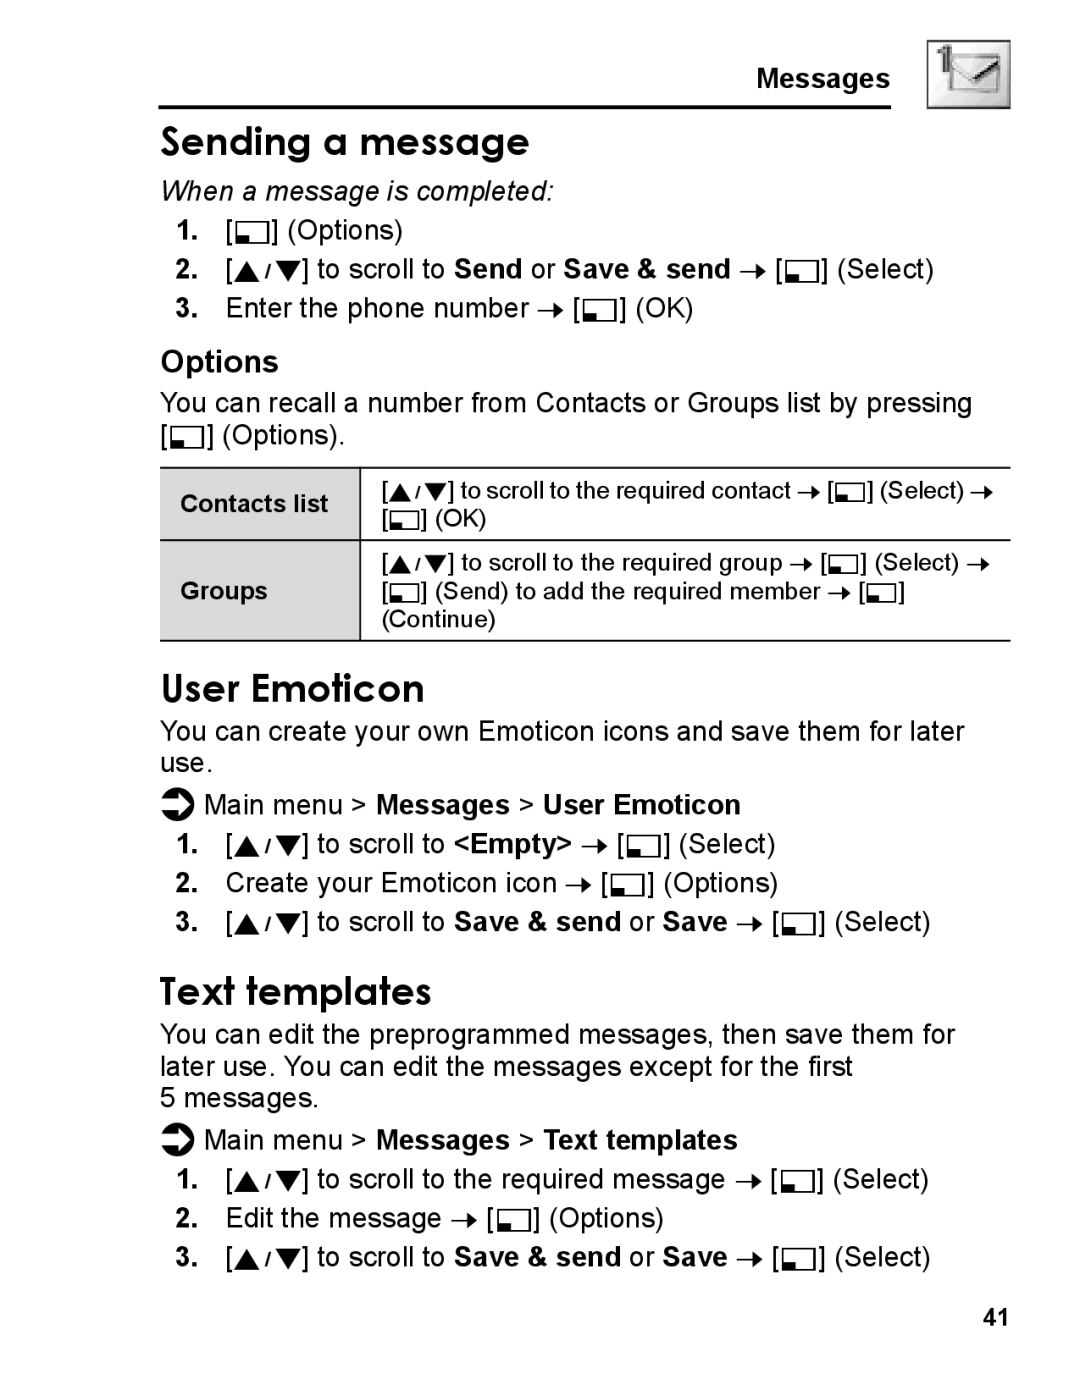 Panasonic A210 manual Sending a message, Main menu Messages User Emoticon, Main menu Messages Text templates 